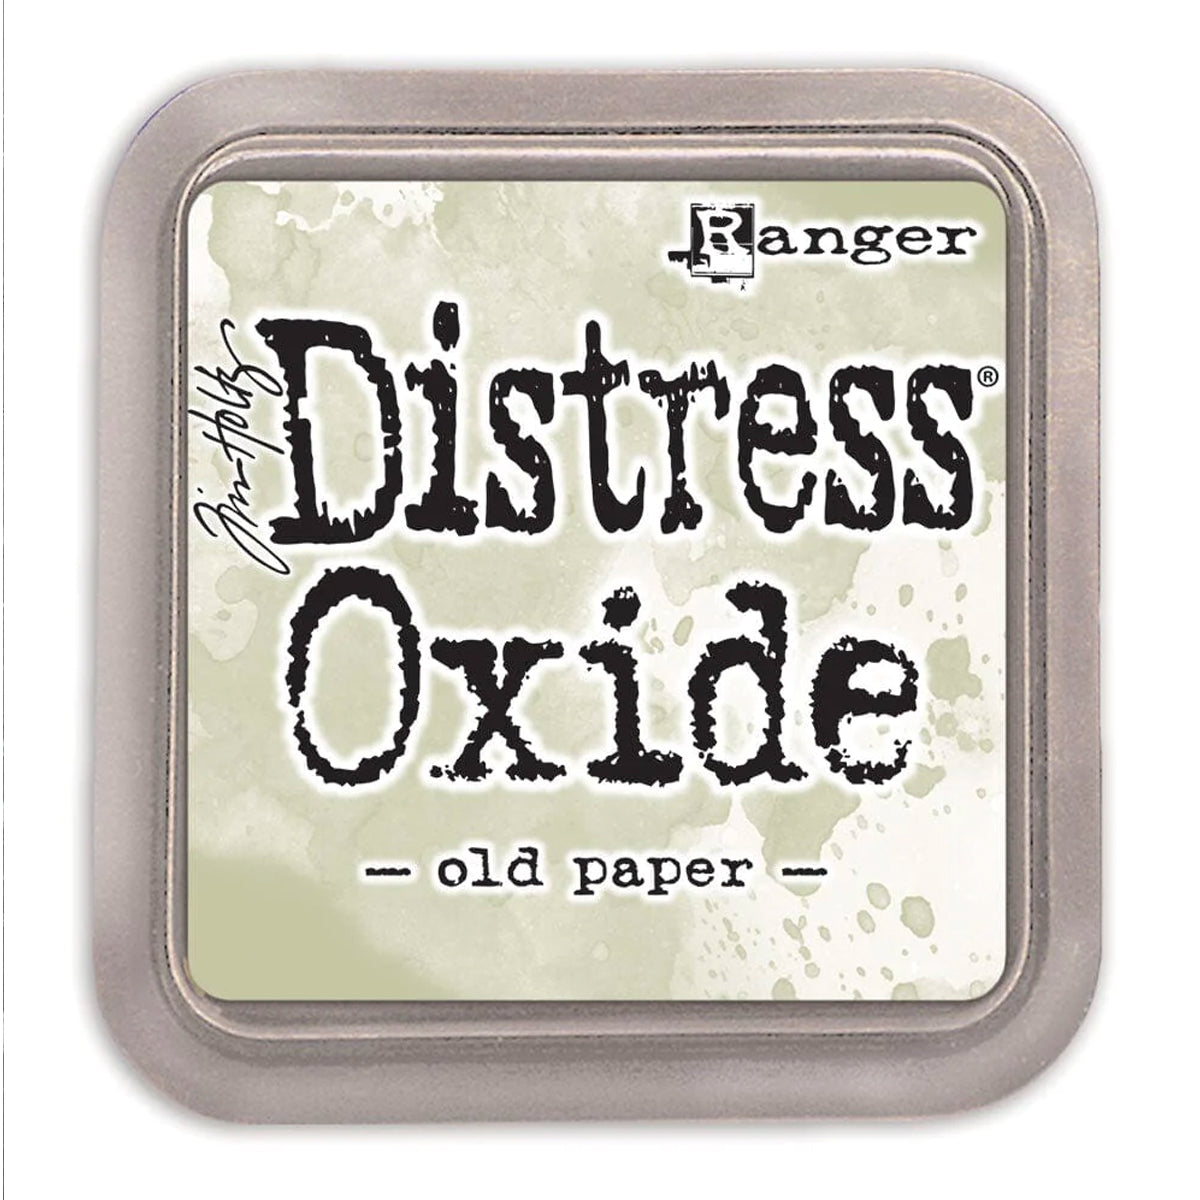 Tim Holtz Distress Oxide Ink Pad - Old Paper